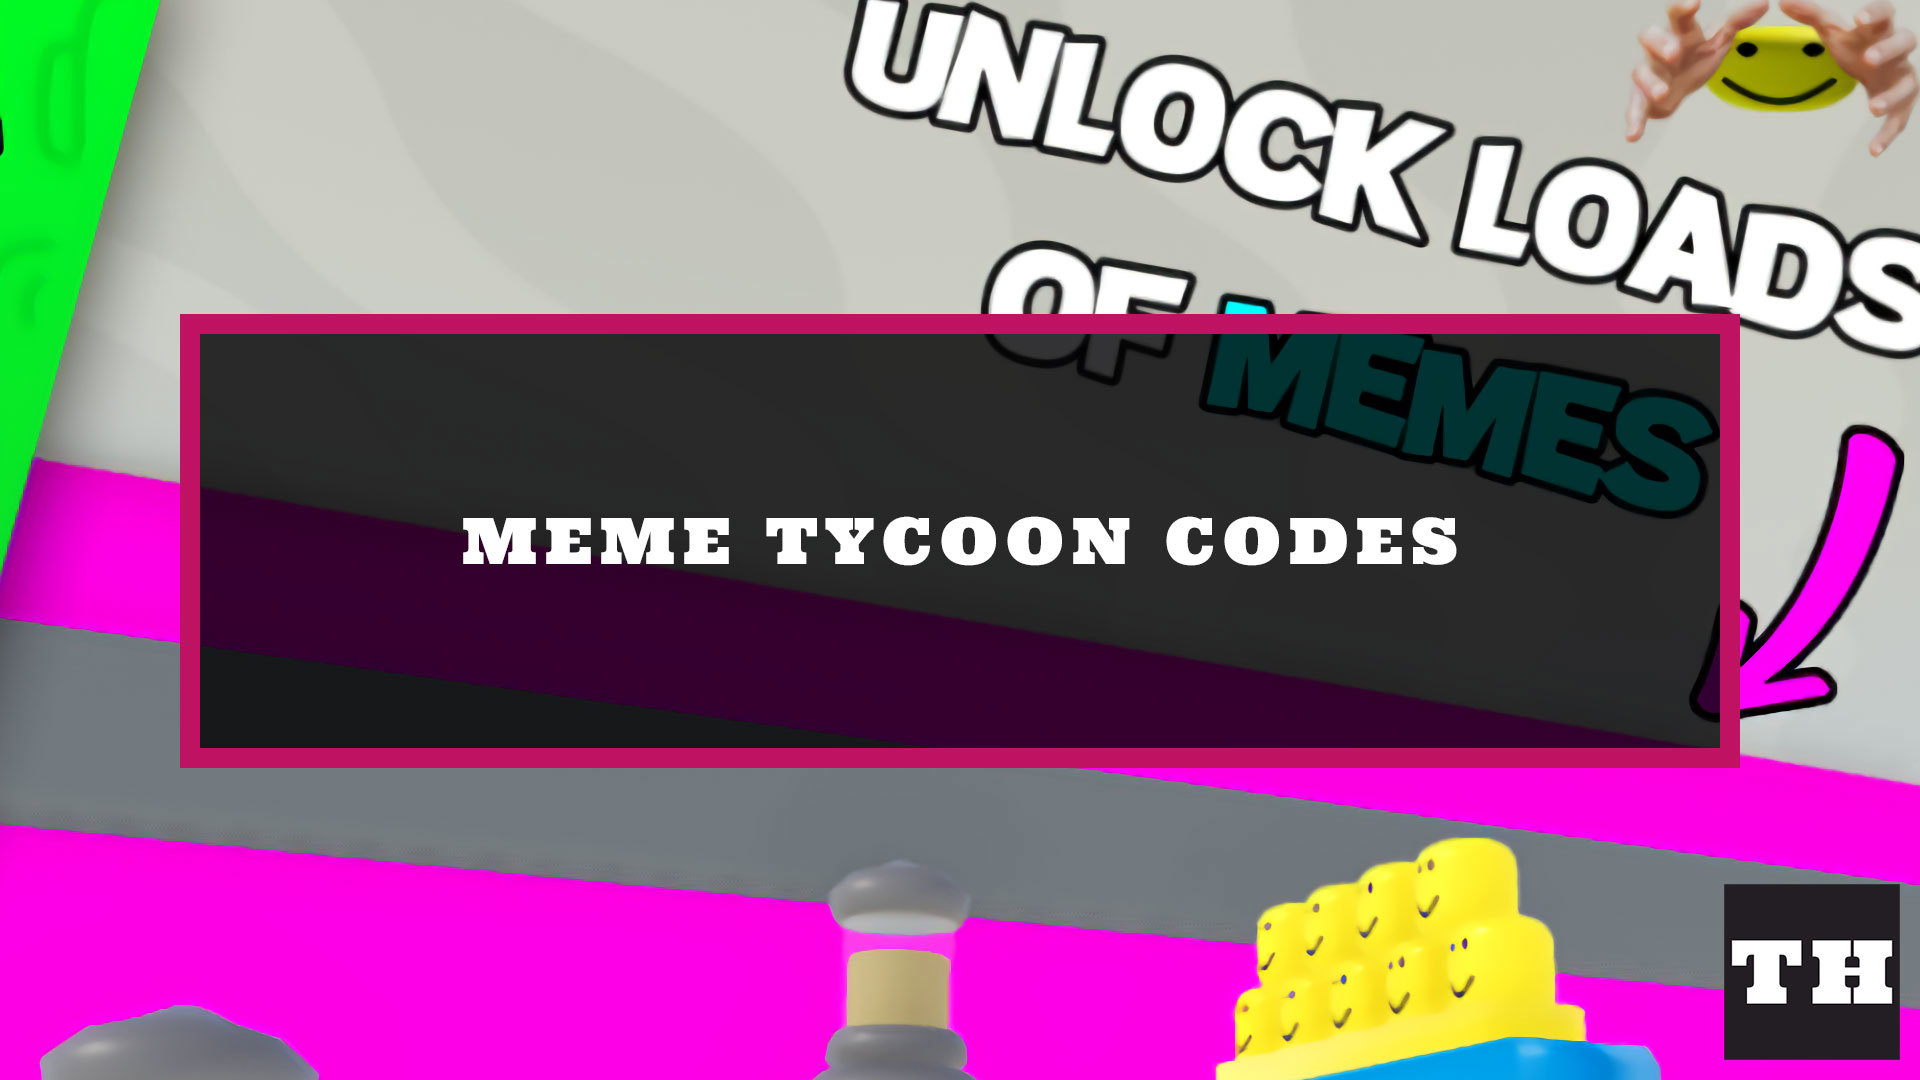 Meme Tycoon - Roblox